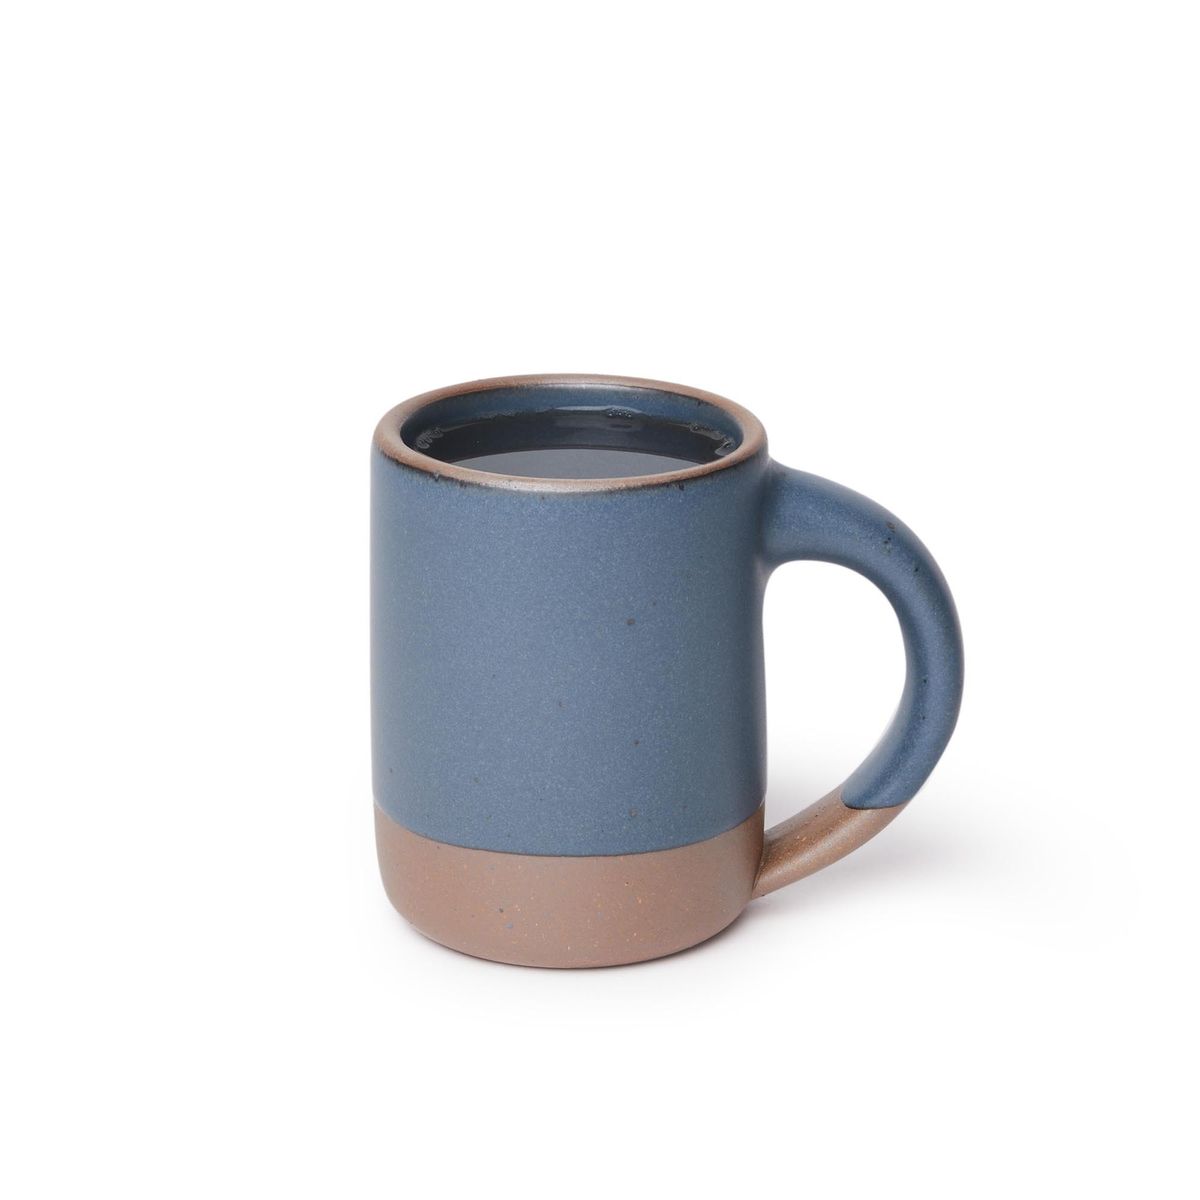 The Mug in Blue Ridge filled with coffee